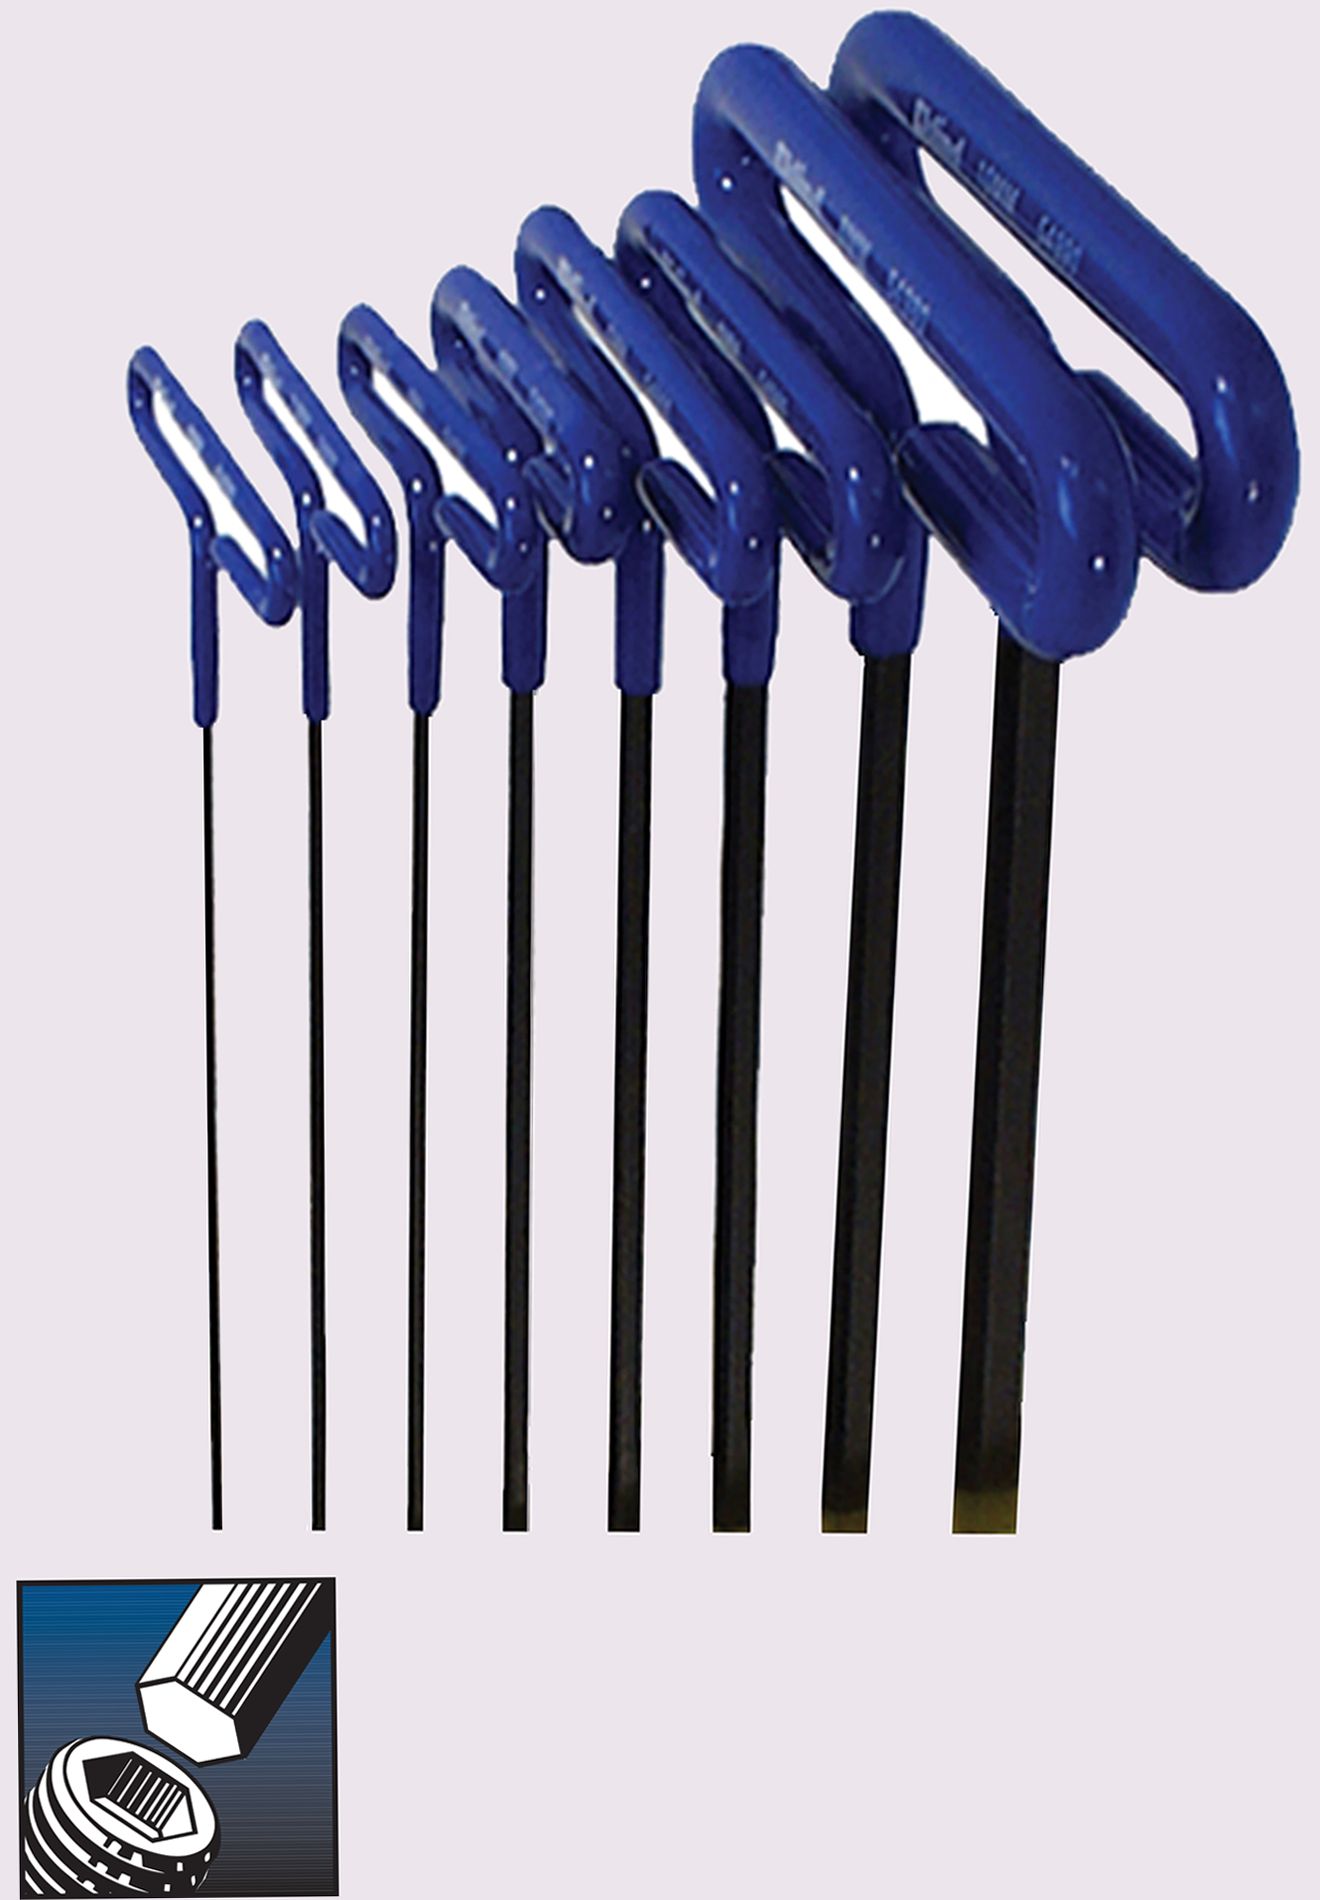 Eklind&#174 Cushion Grip Hex T-Key Set, 6 inch Series, 8 keys: 2 to 10 MM & Pouch